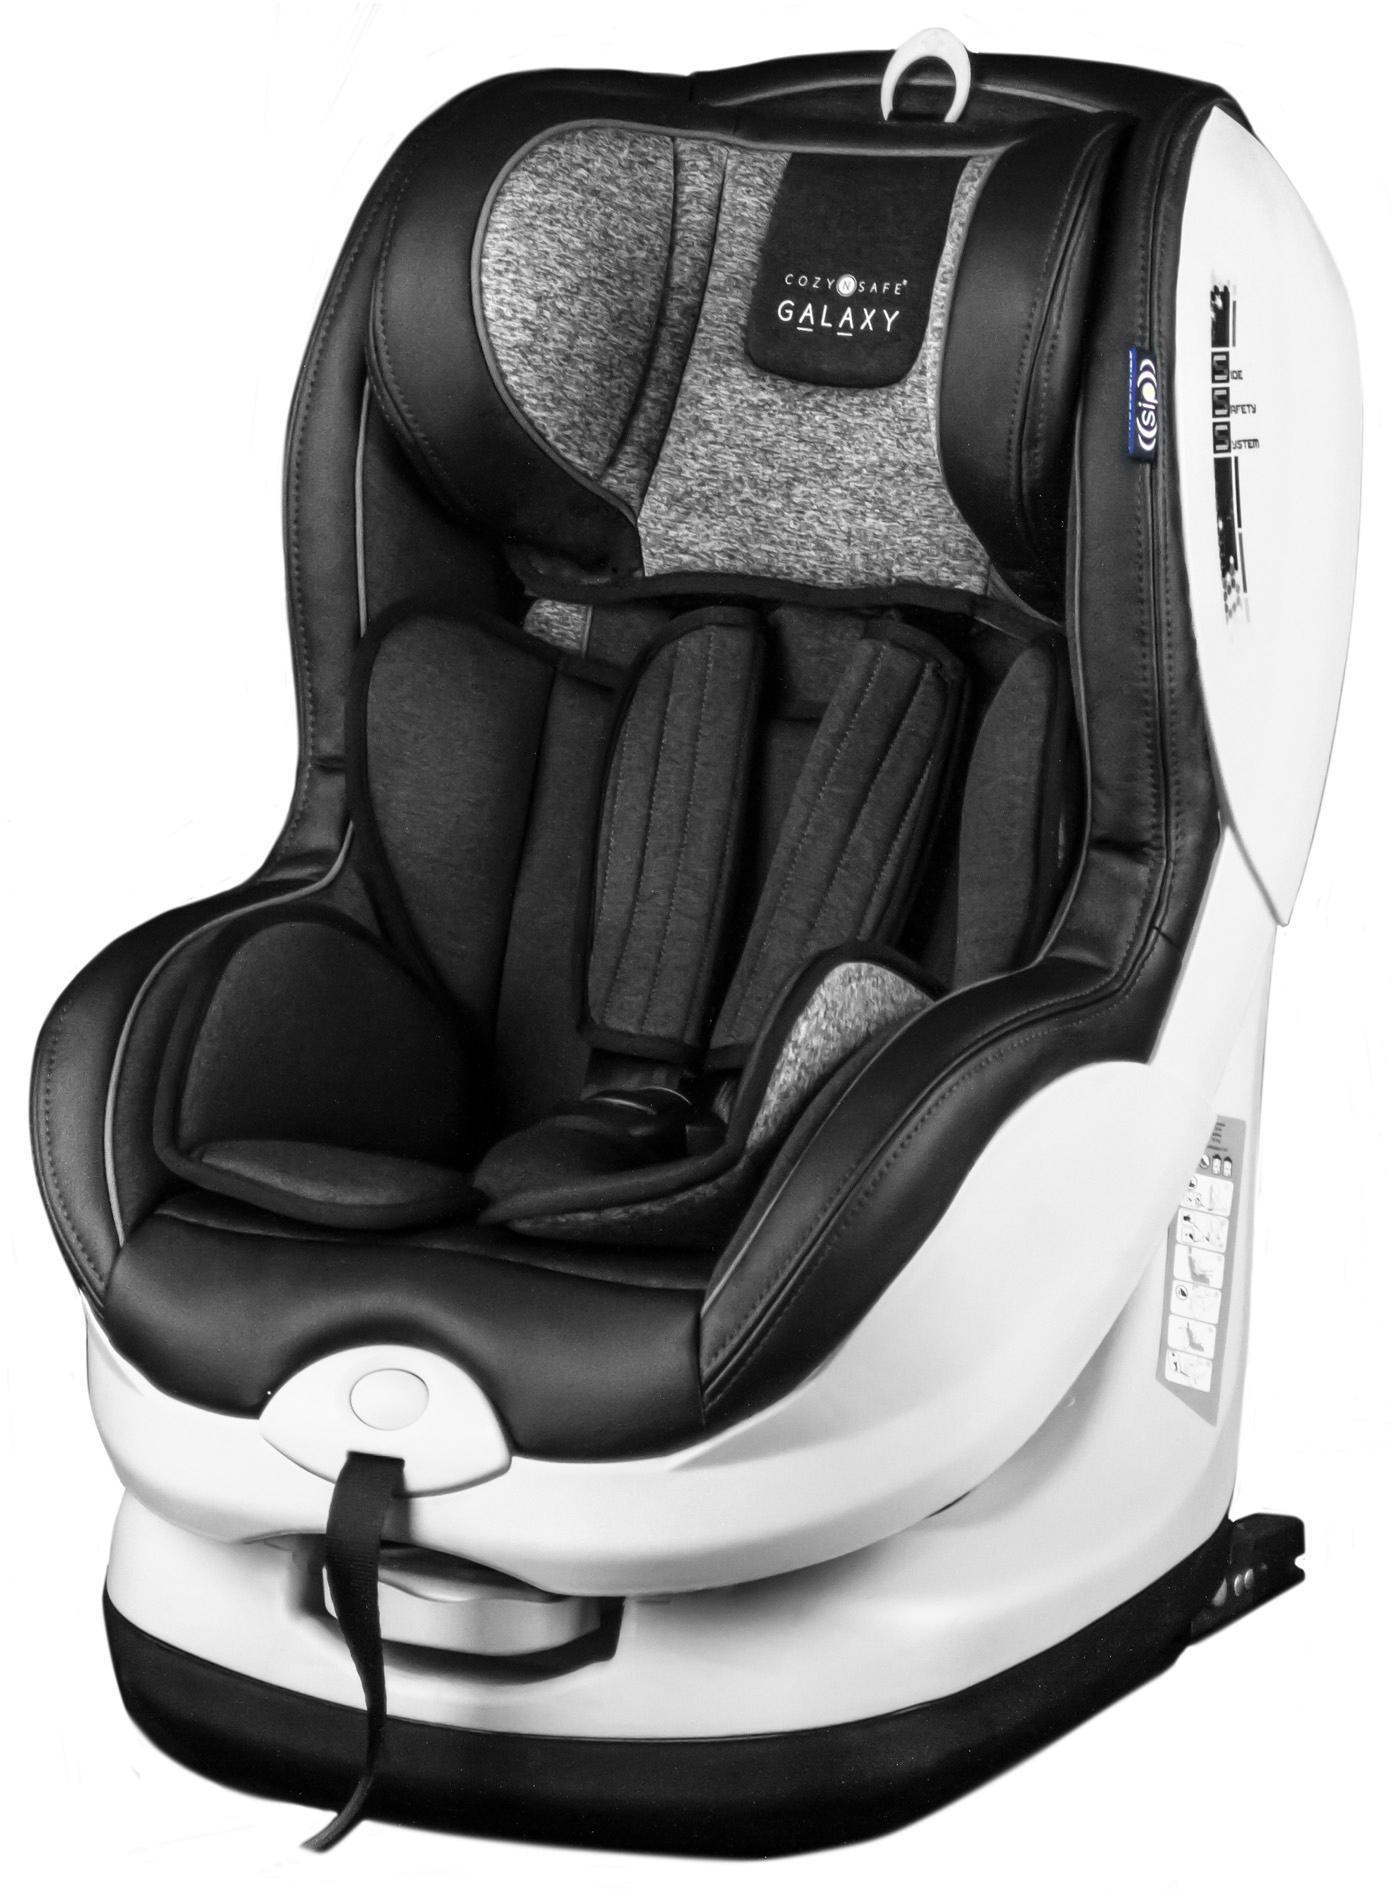 Cozynsafe Galaxy Group 1 Isofix Child Car Seat  - Graphite